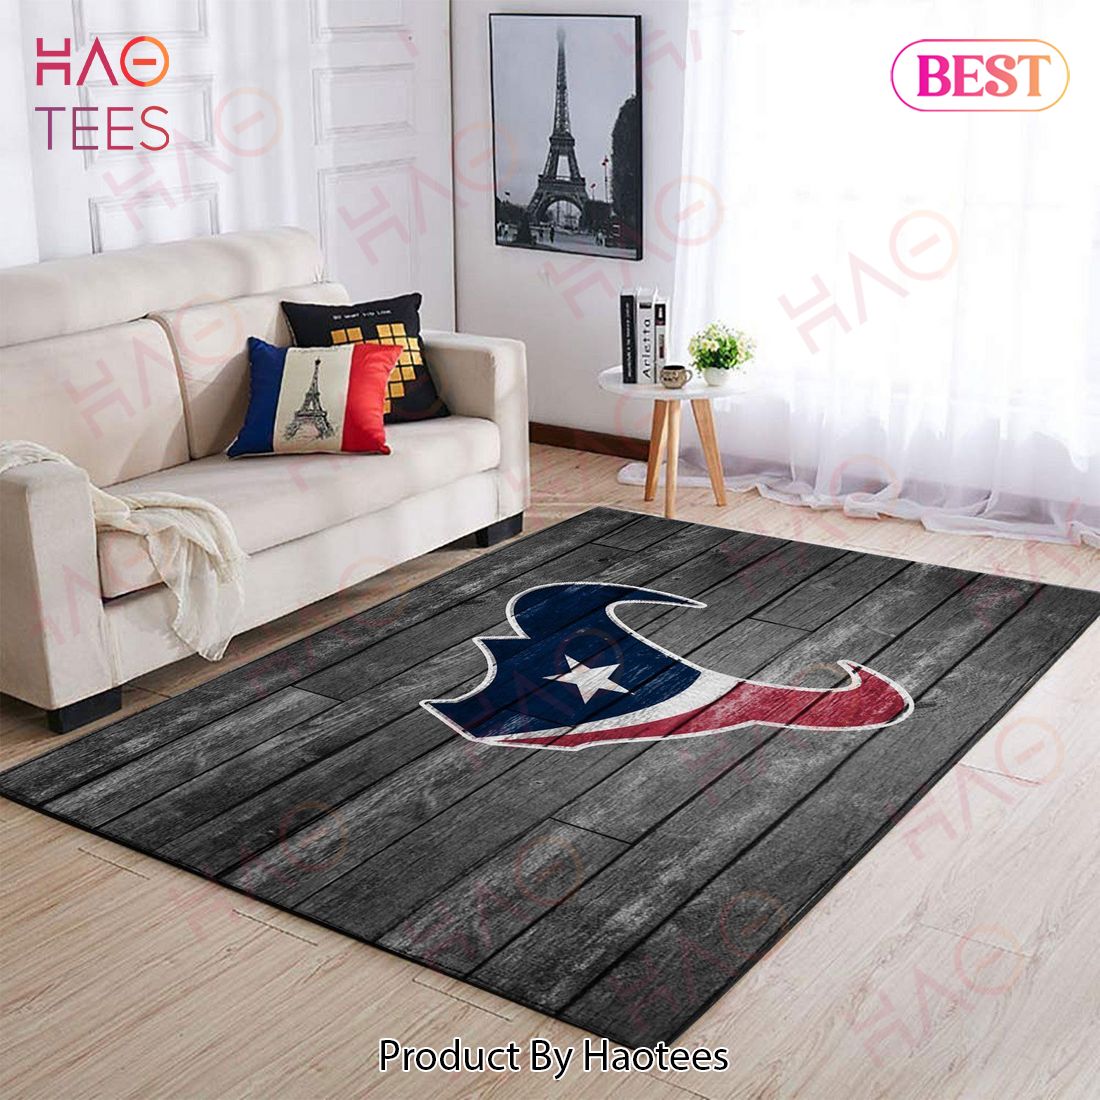 Houston Texans Nfl Team Logo Grey Area Rugs Wooden Style Living Room Carpet Sports Rug Regtangle Carpet Floor Decor Home Decor